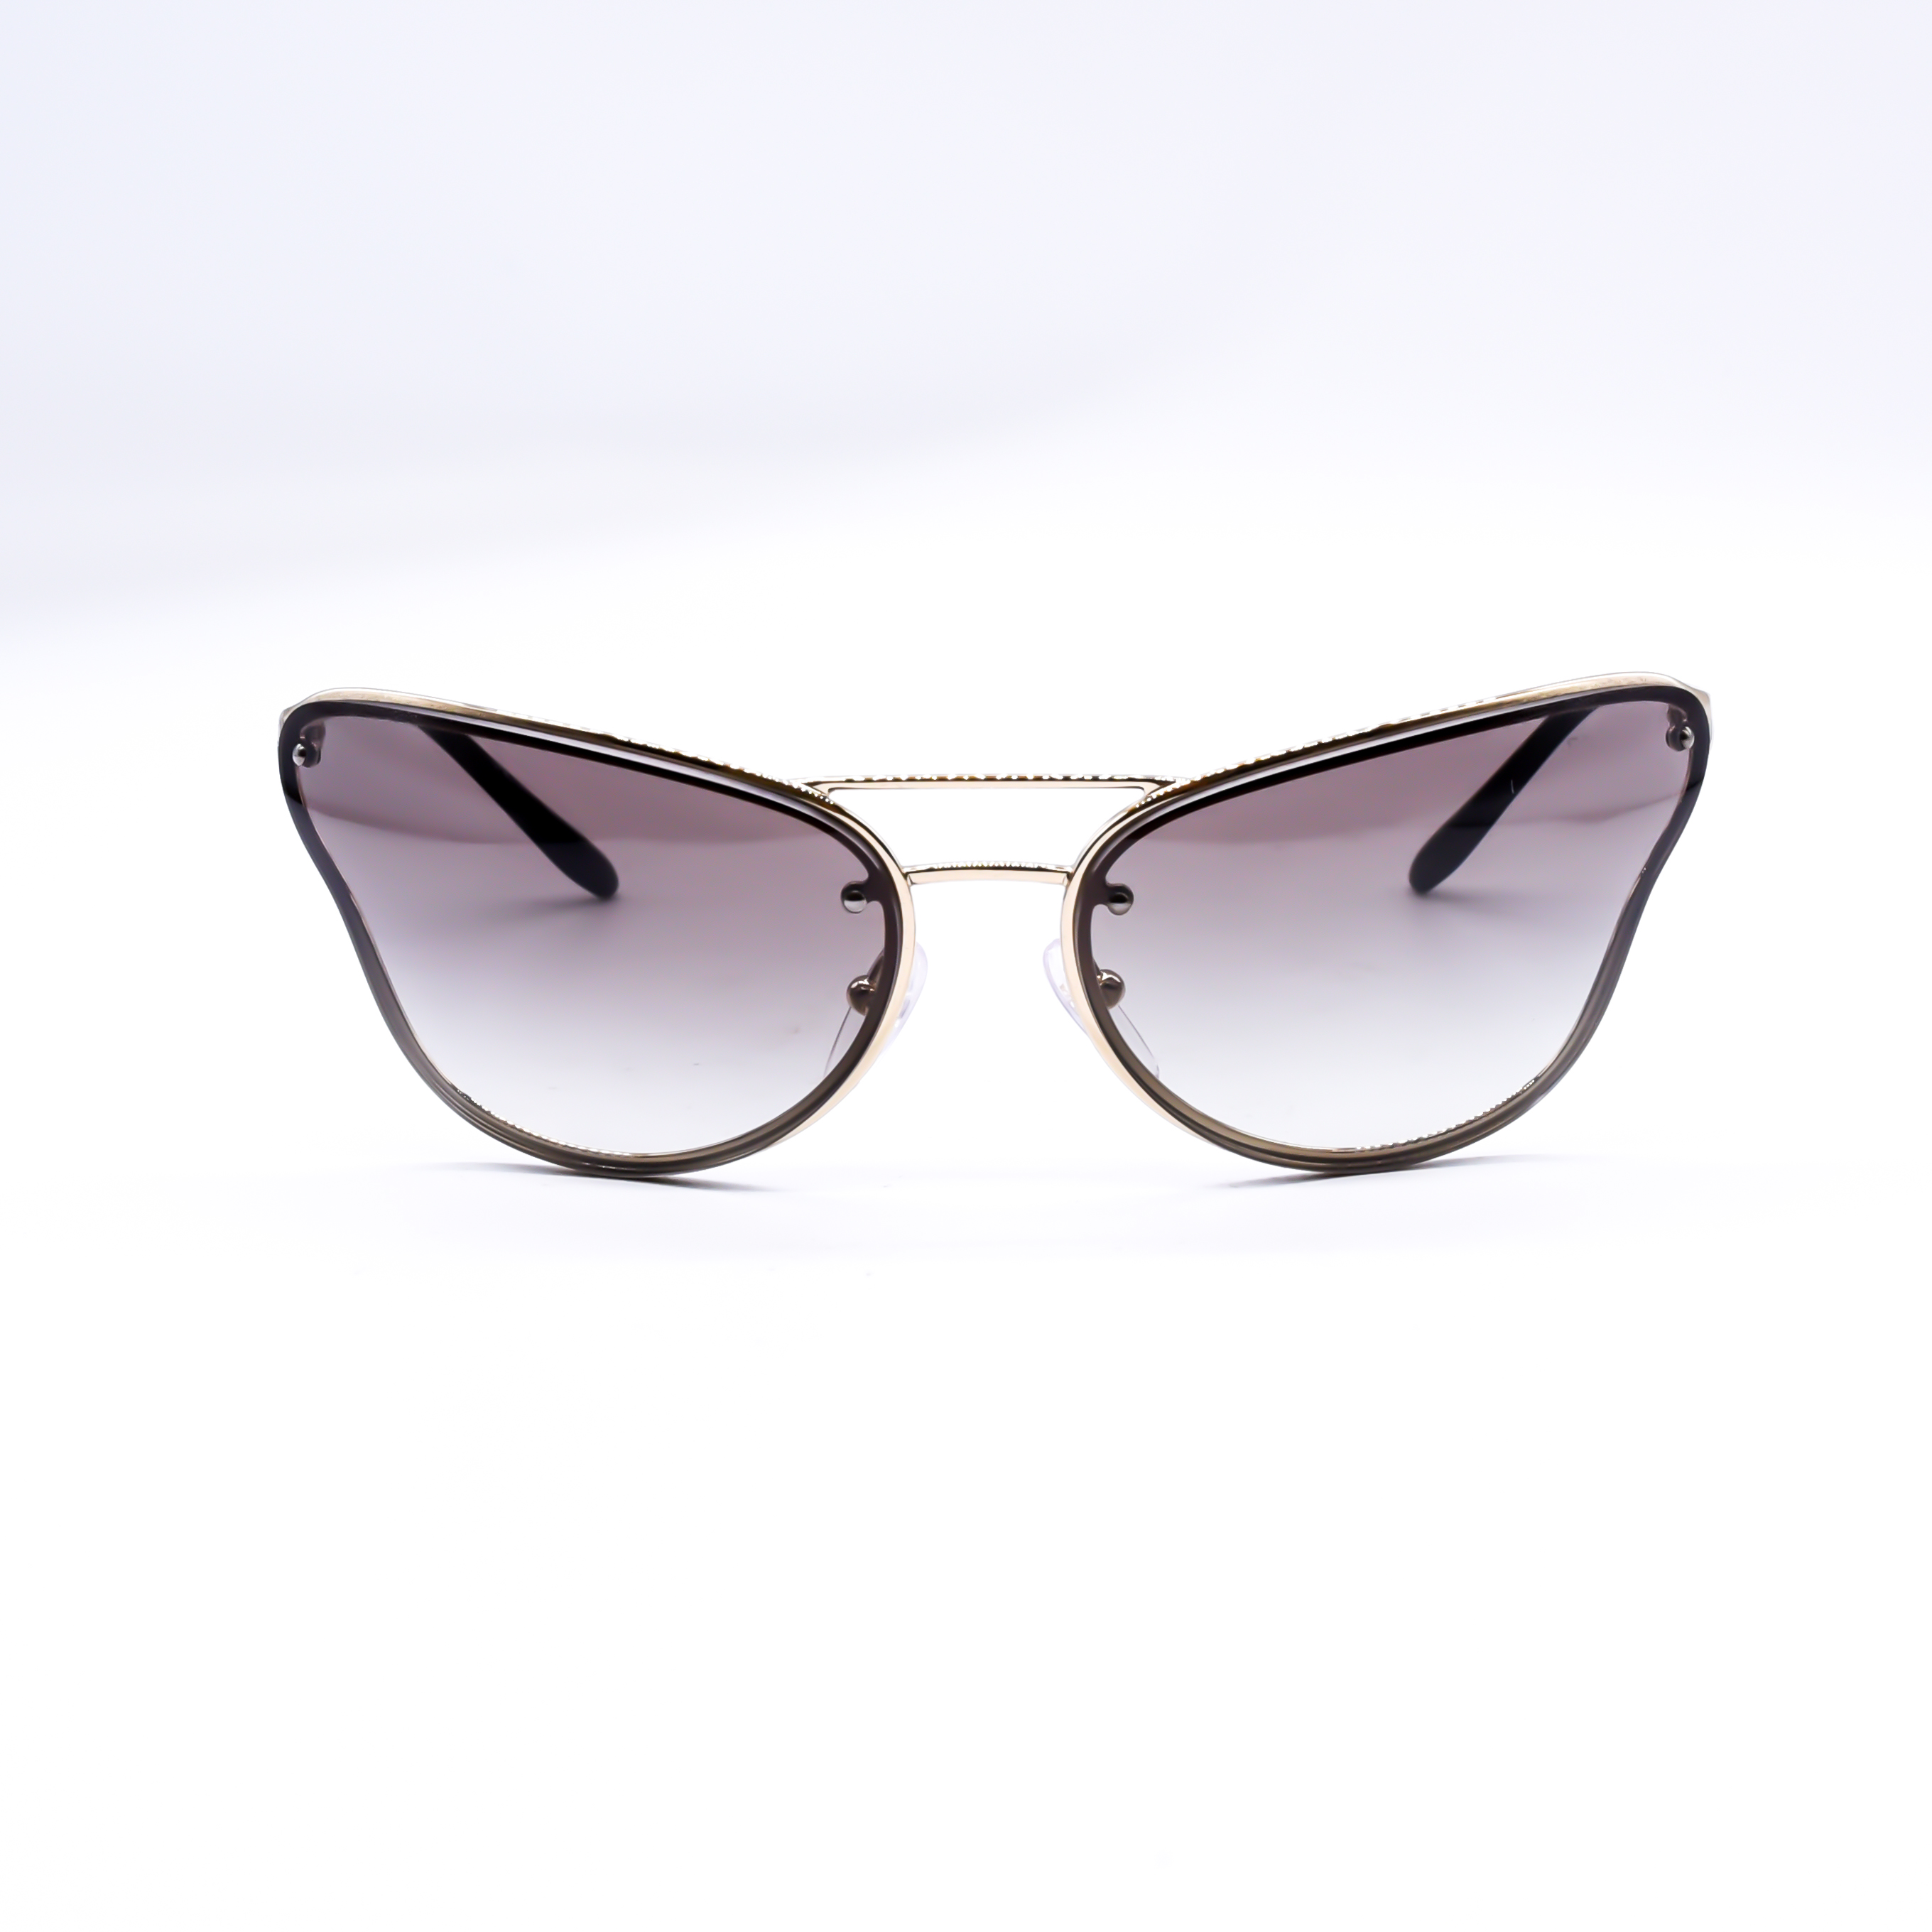 Prada Women's Semi-Rimless Sunglasses - image 1 of 2